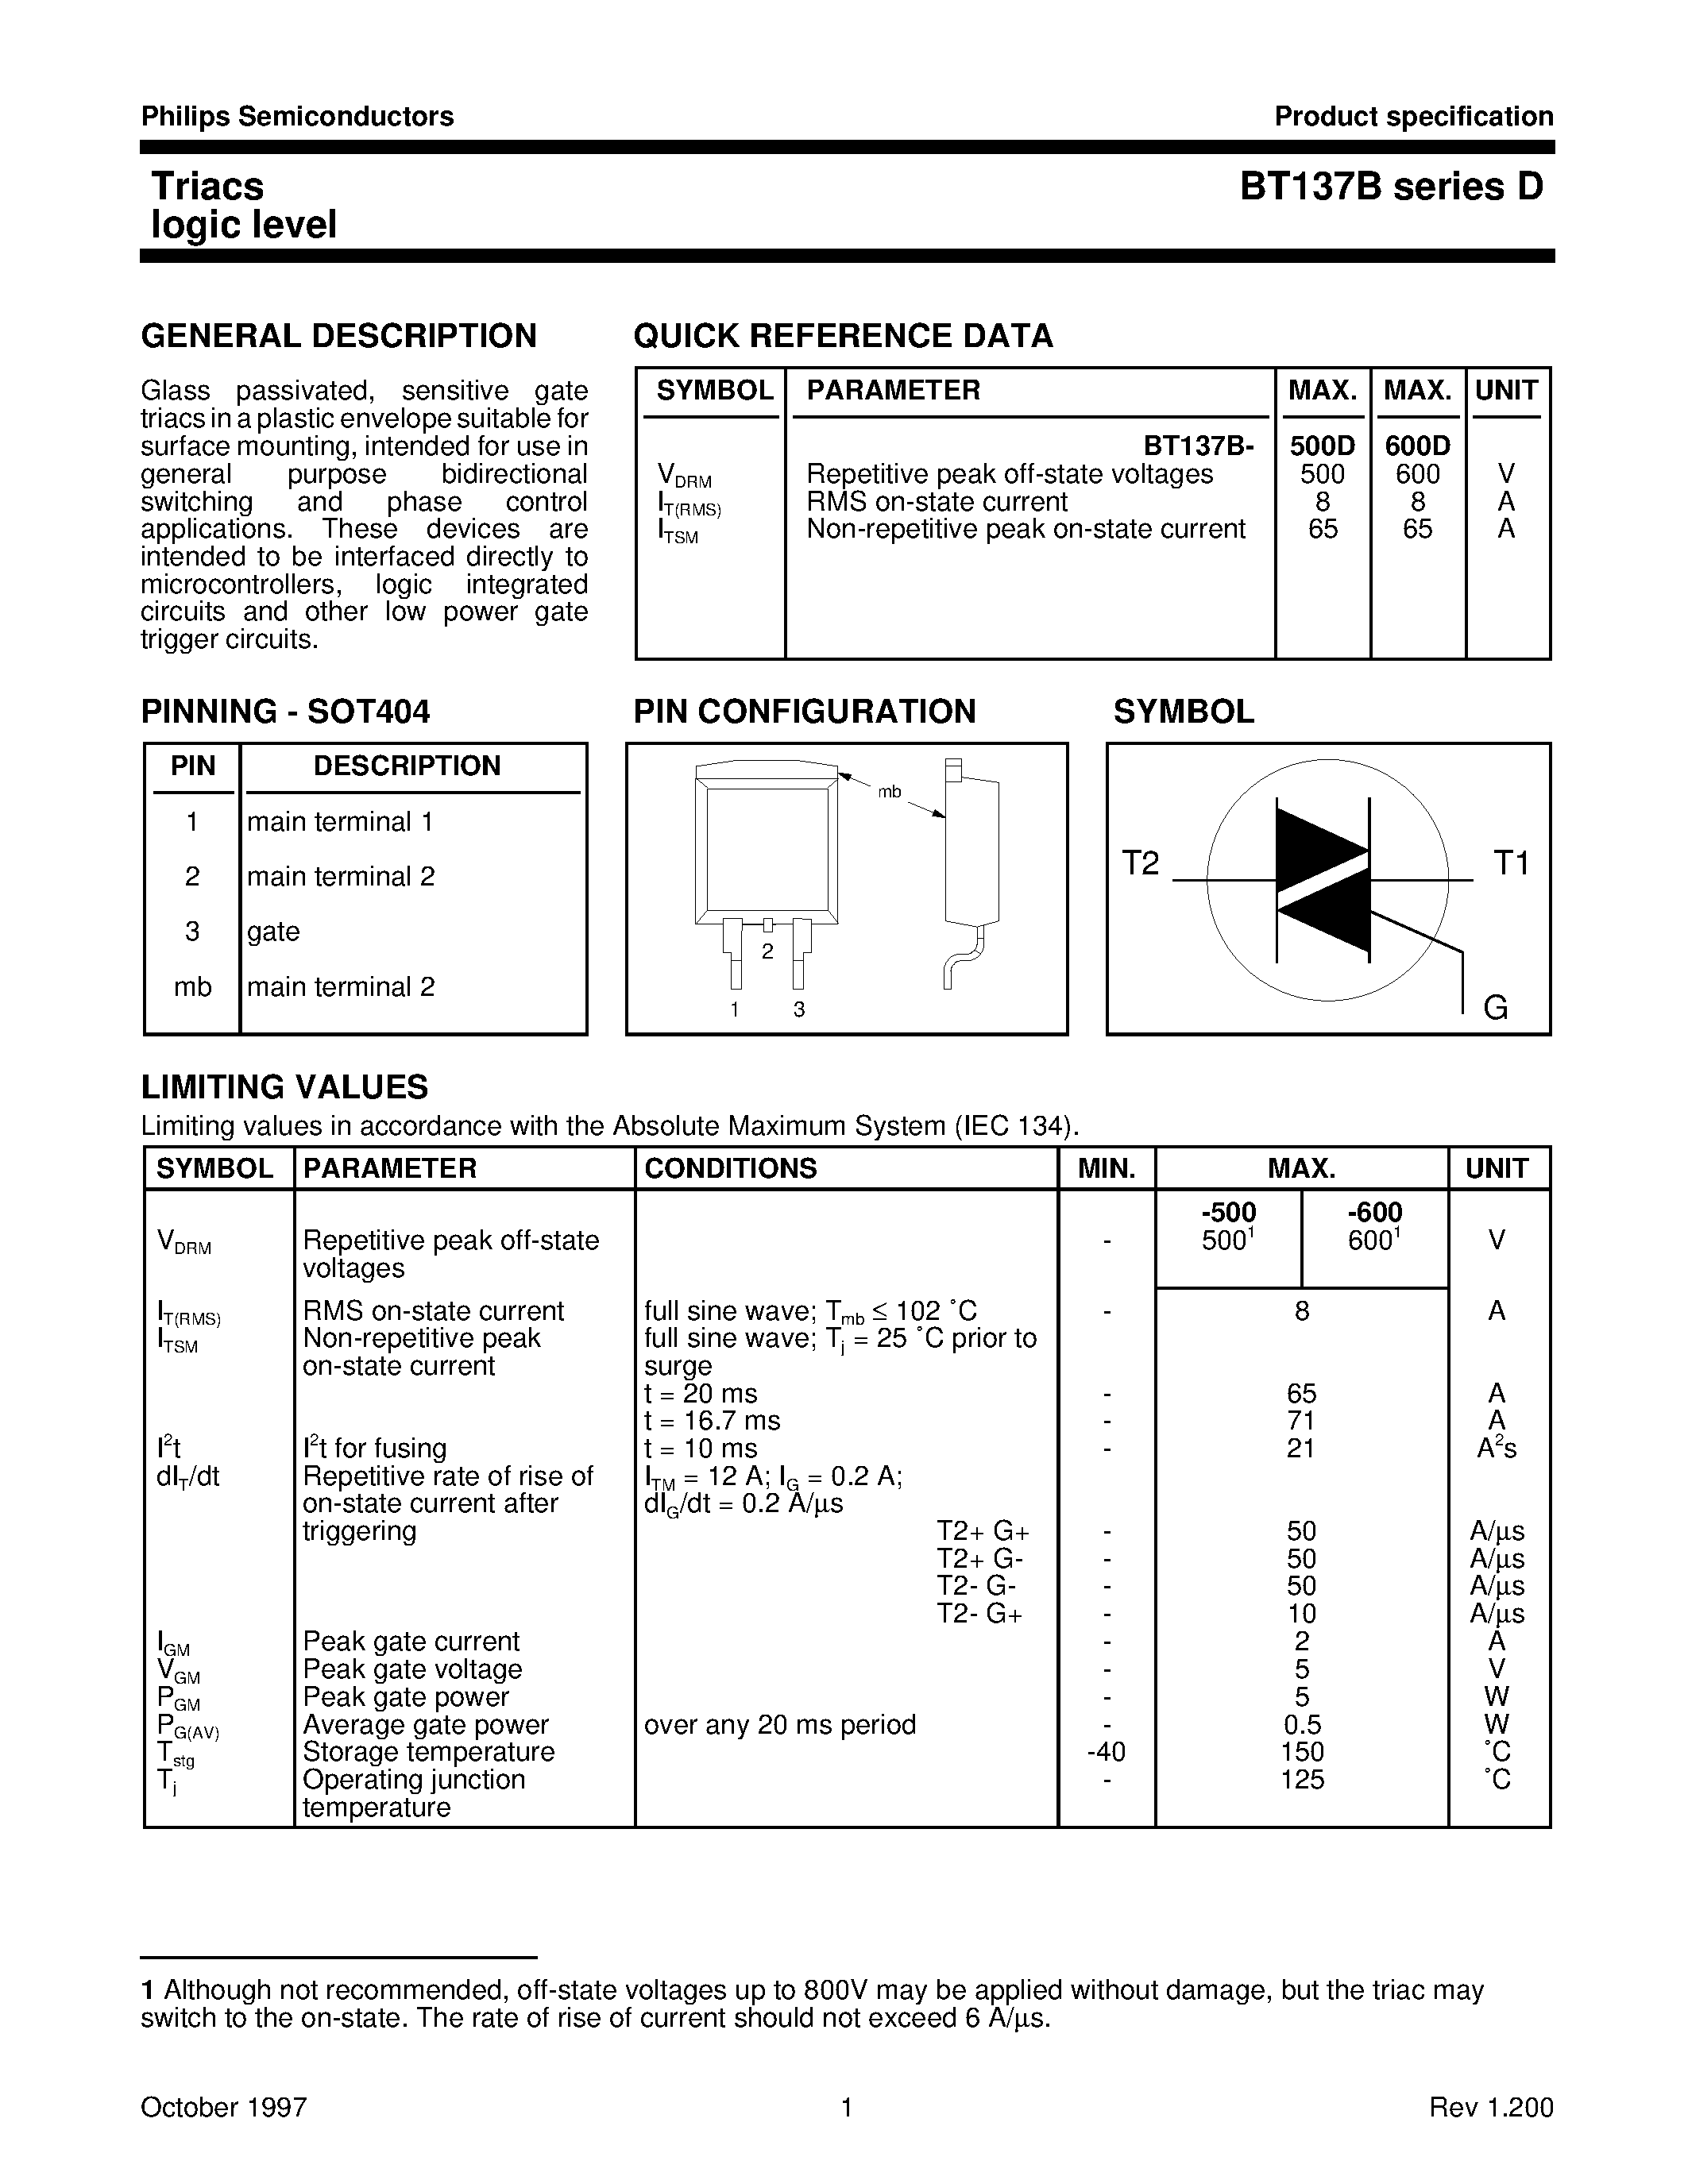 Datasheet BT137B-600D - Triacs logic level page 1